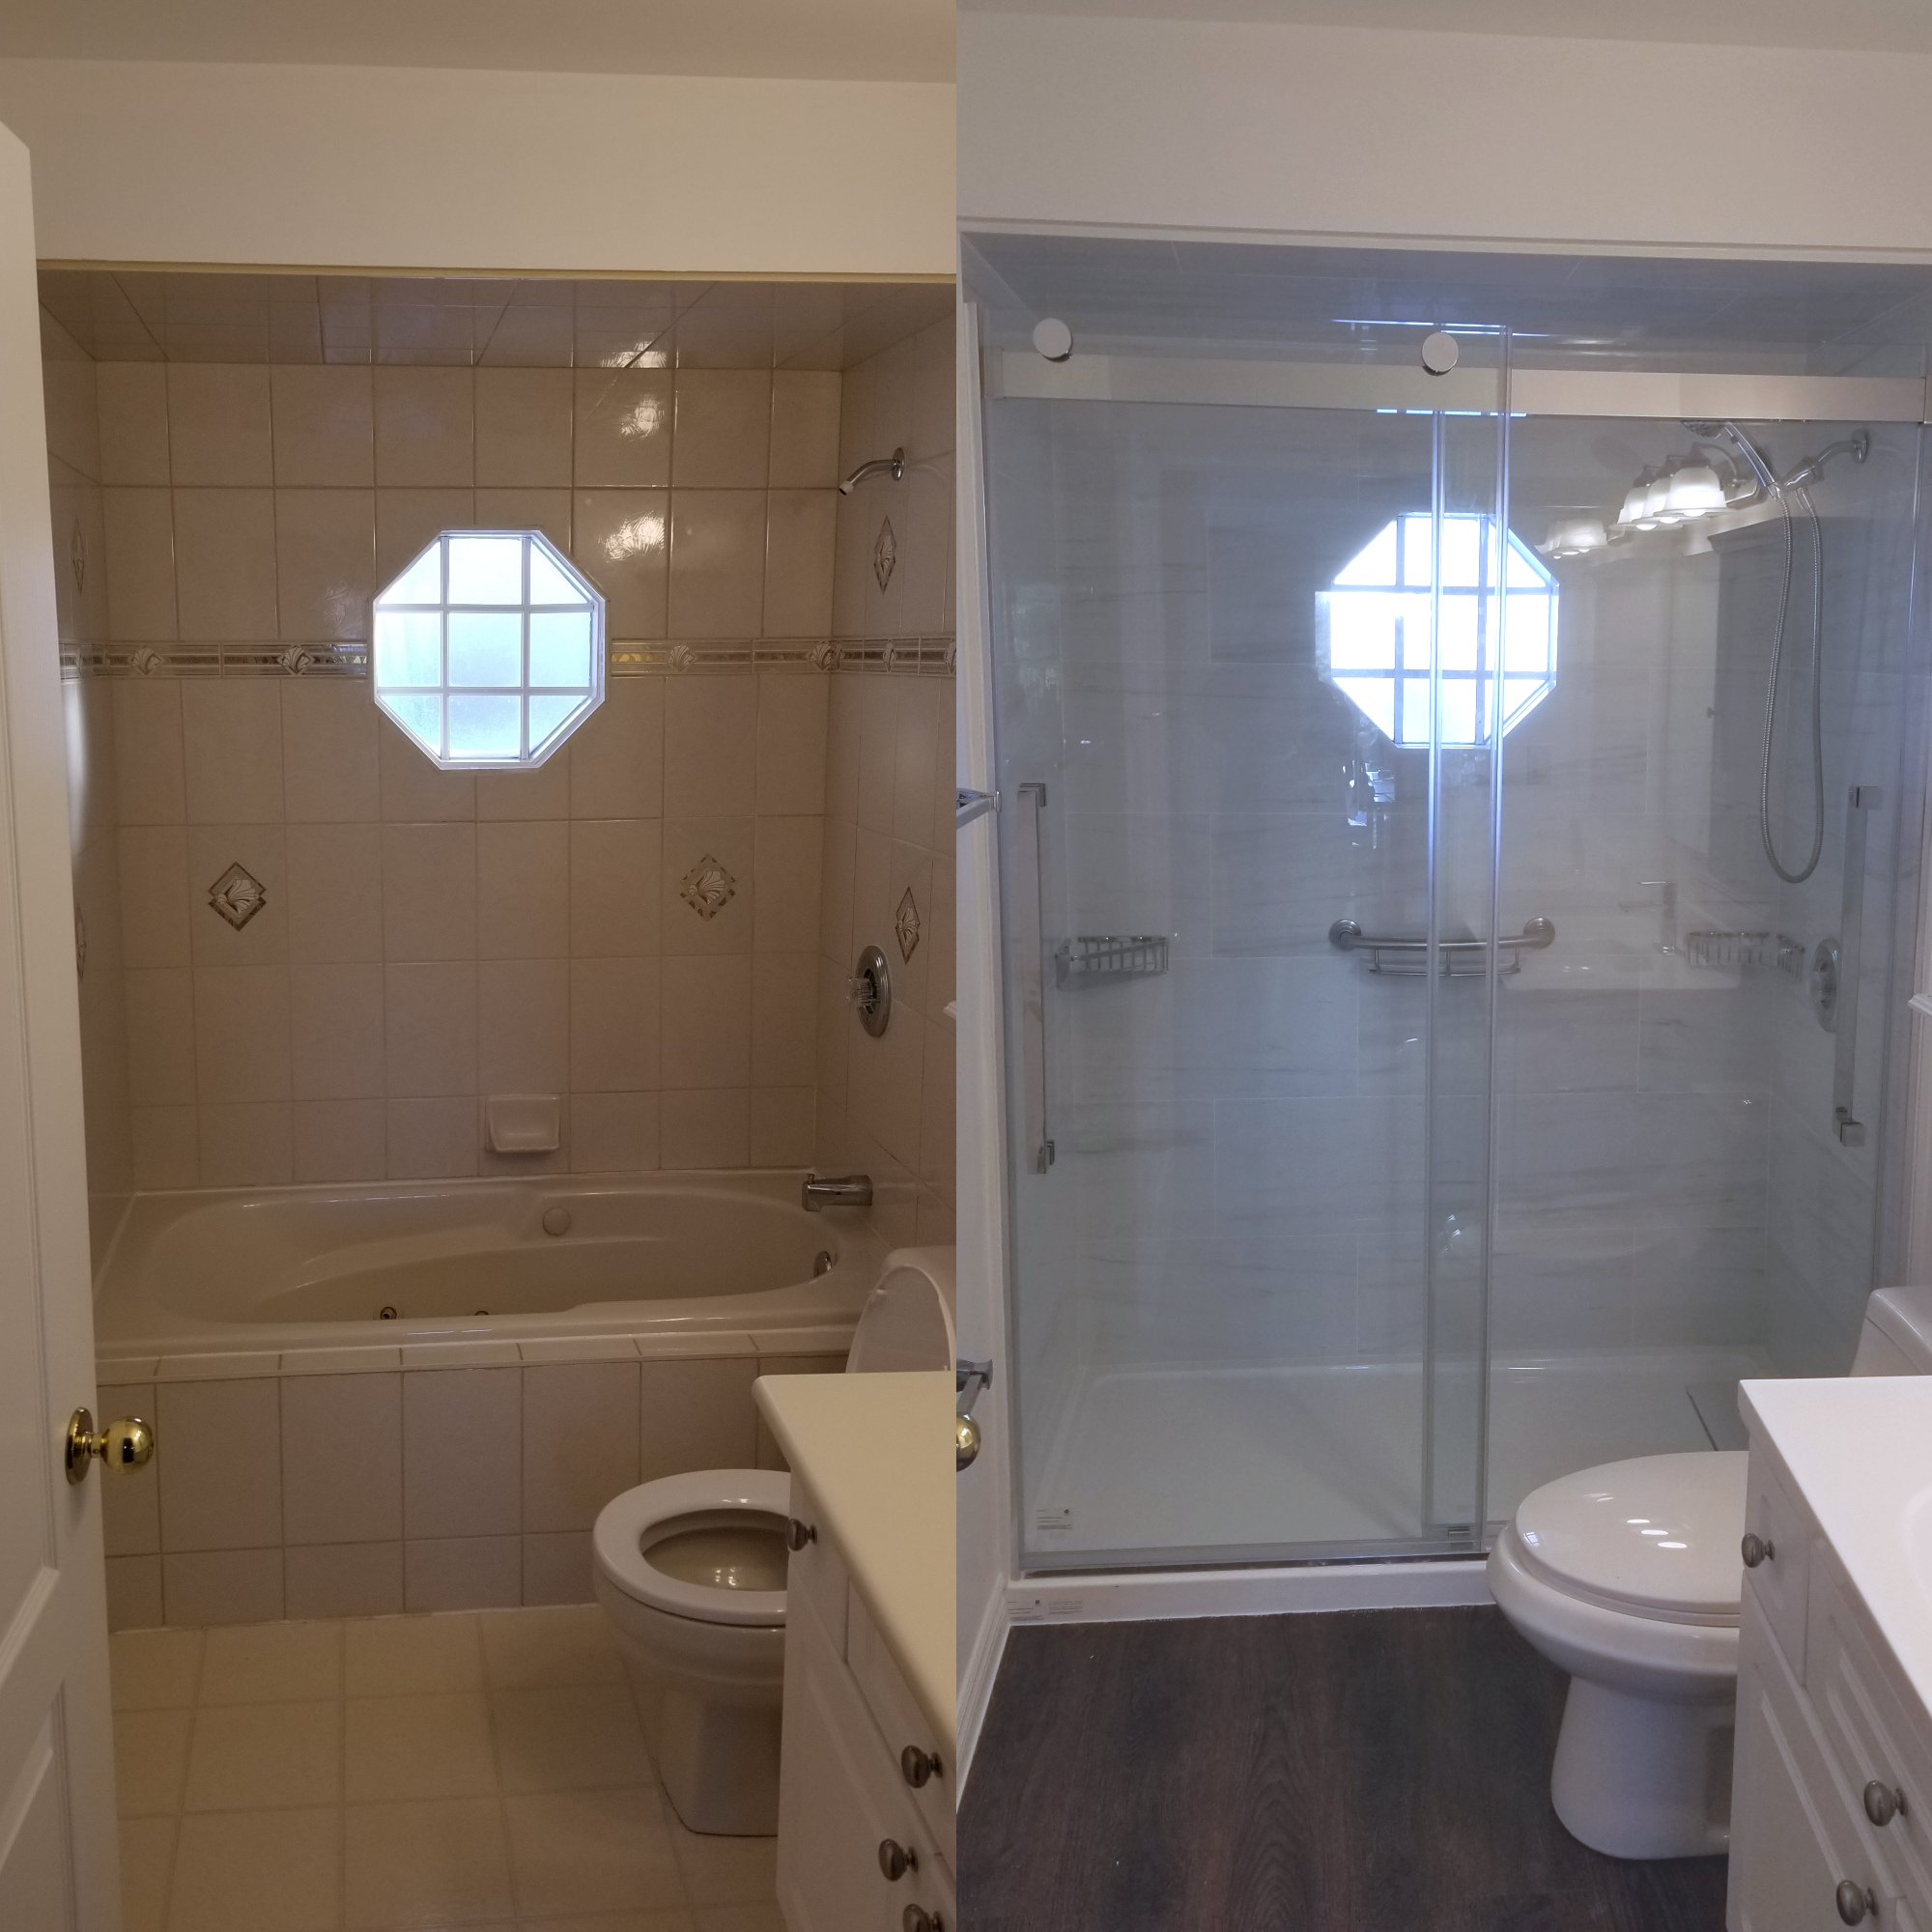 Before & After Walk in Tile Shower